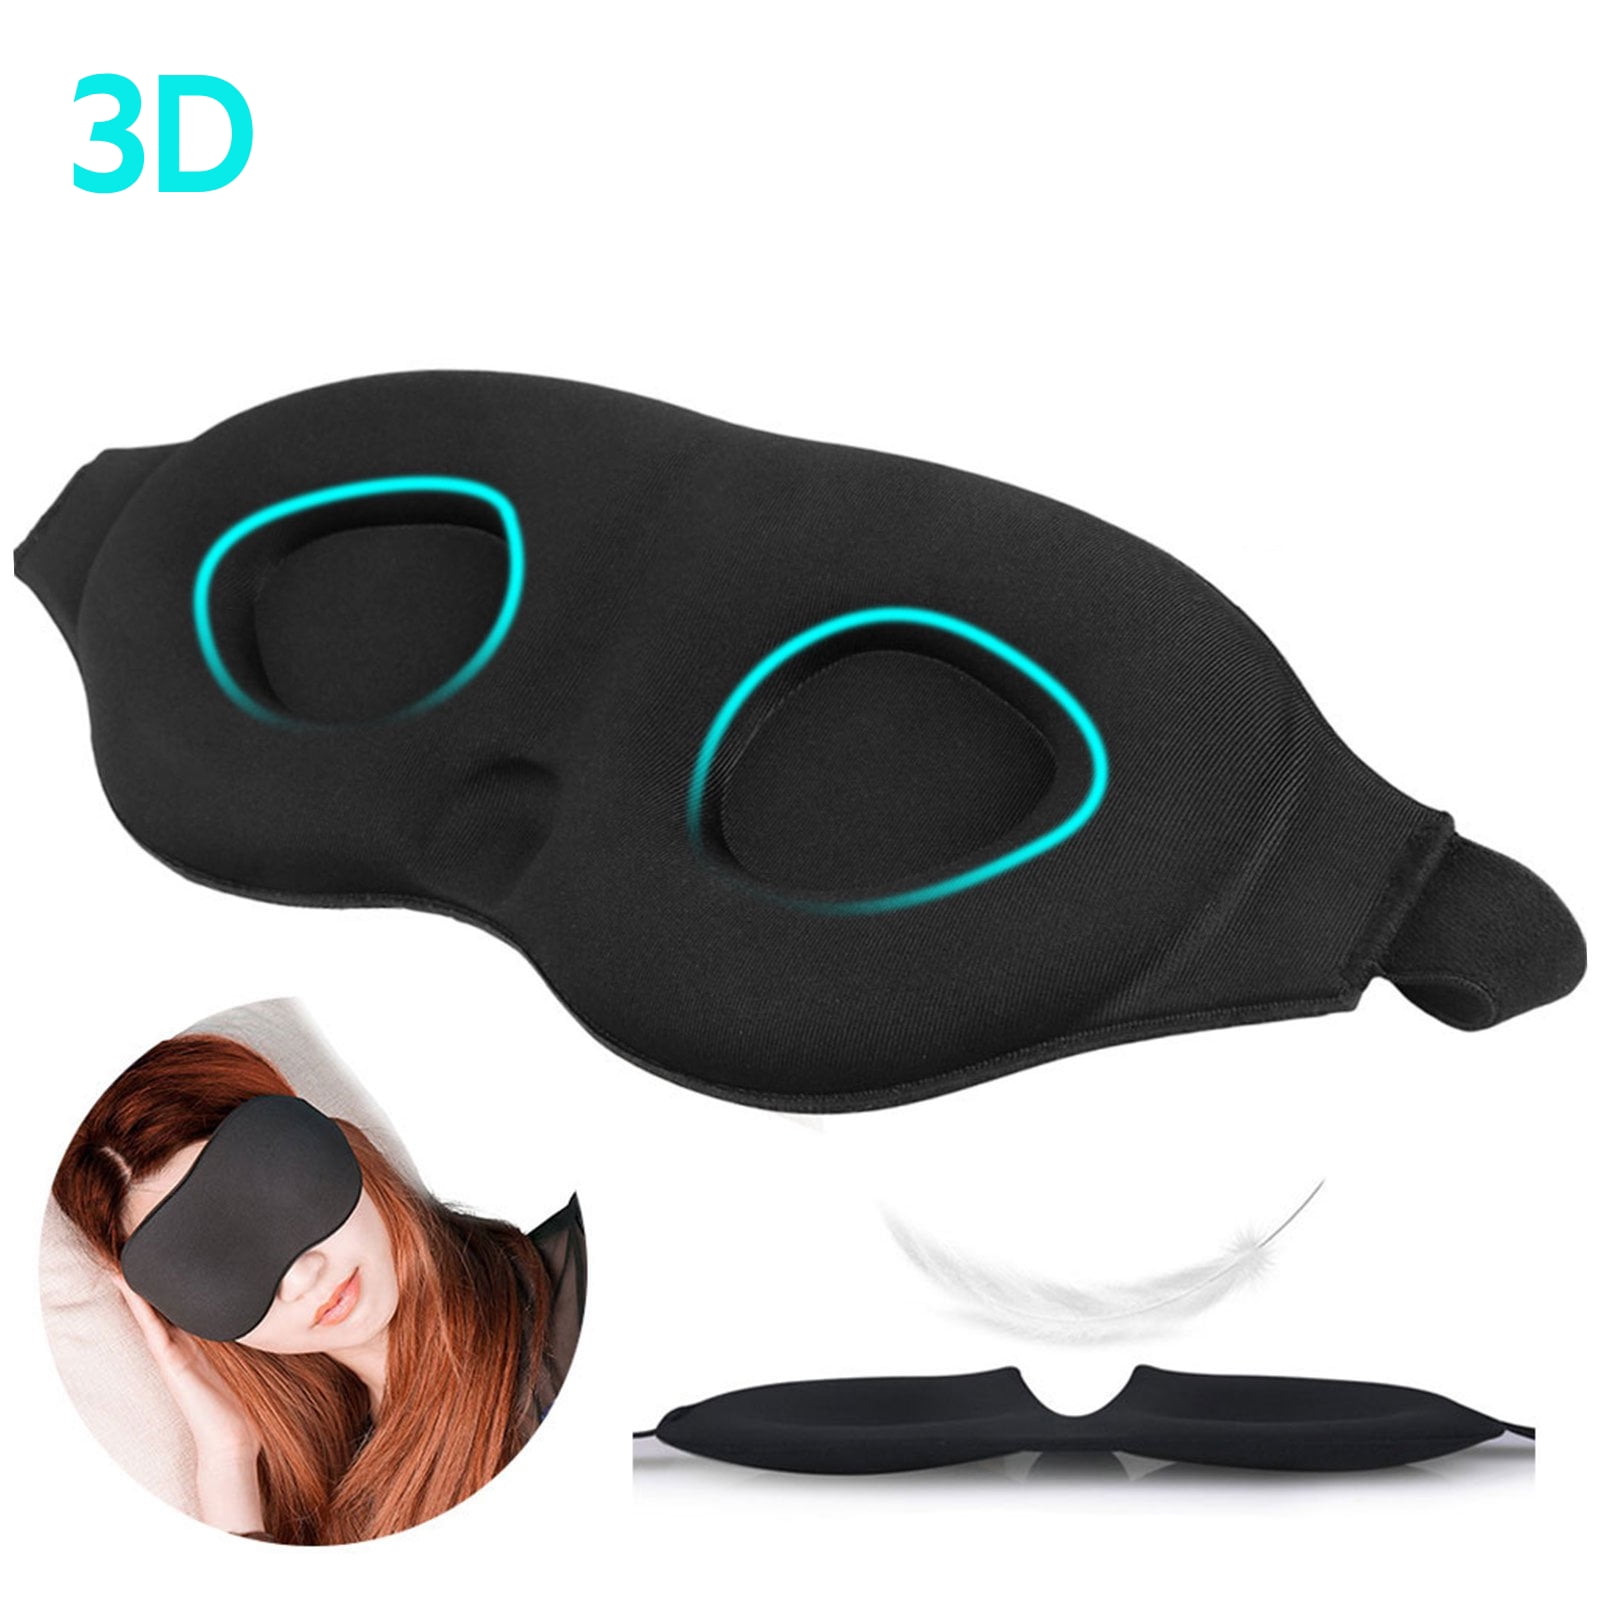 Nap,Travel and Meditation ZHUFUREN Sleep Mask for Men Women,3D Eye Mask for Sleeping of Light Blocking Concave Blindfold Eye Cover for Night Sleep 